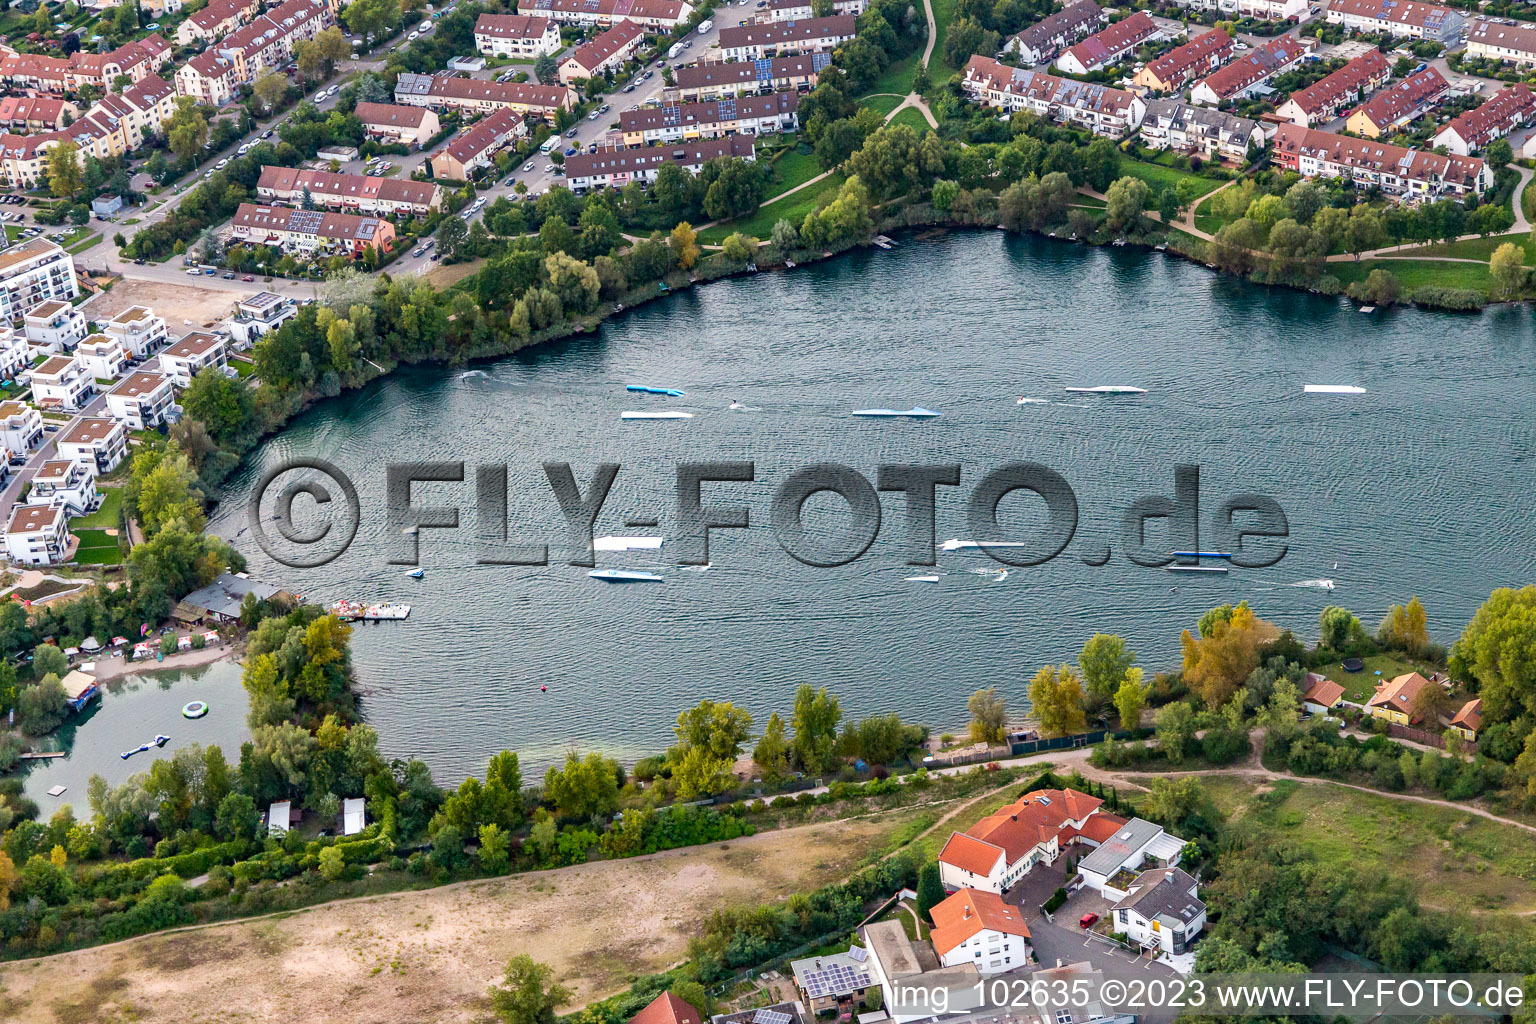 Aerial photograpy of Water skiing and wakeboarding facility on Lake Rheinau in the district Rheinau in Mannheim in the state Baden-Wuerttemberg, Germany